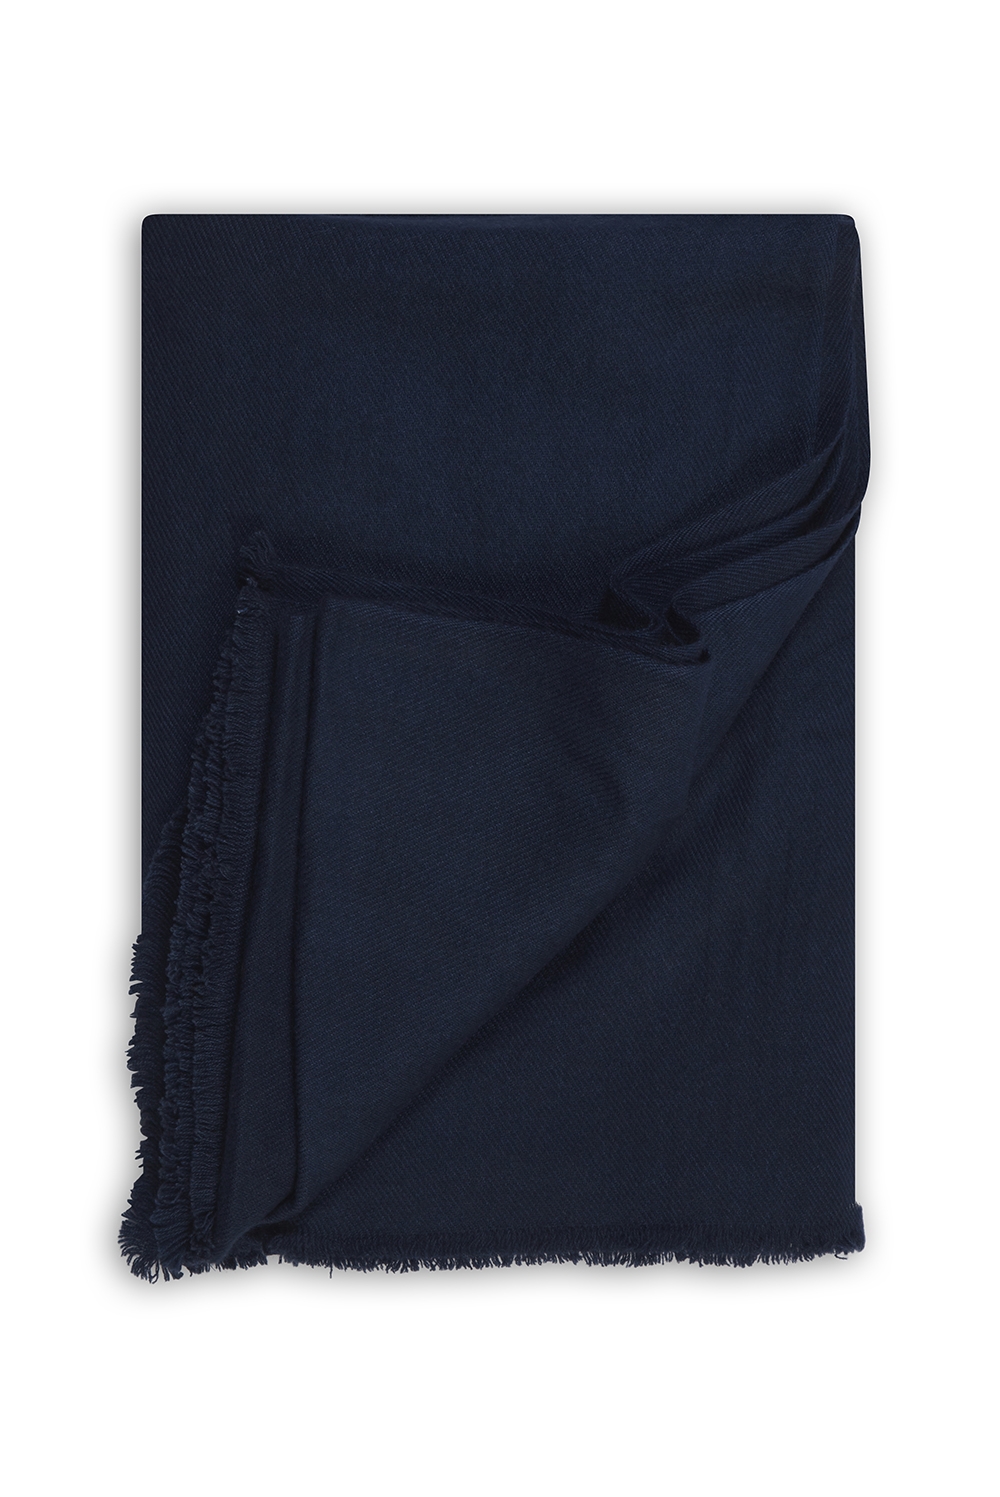 Cachemire pull femme toodoo plain l 220 x 220 bleu marine 220x220cm